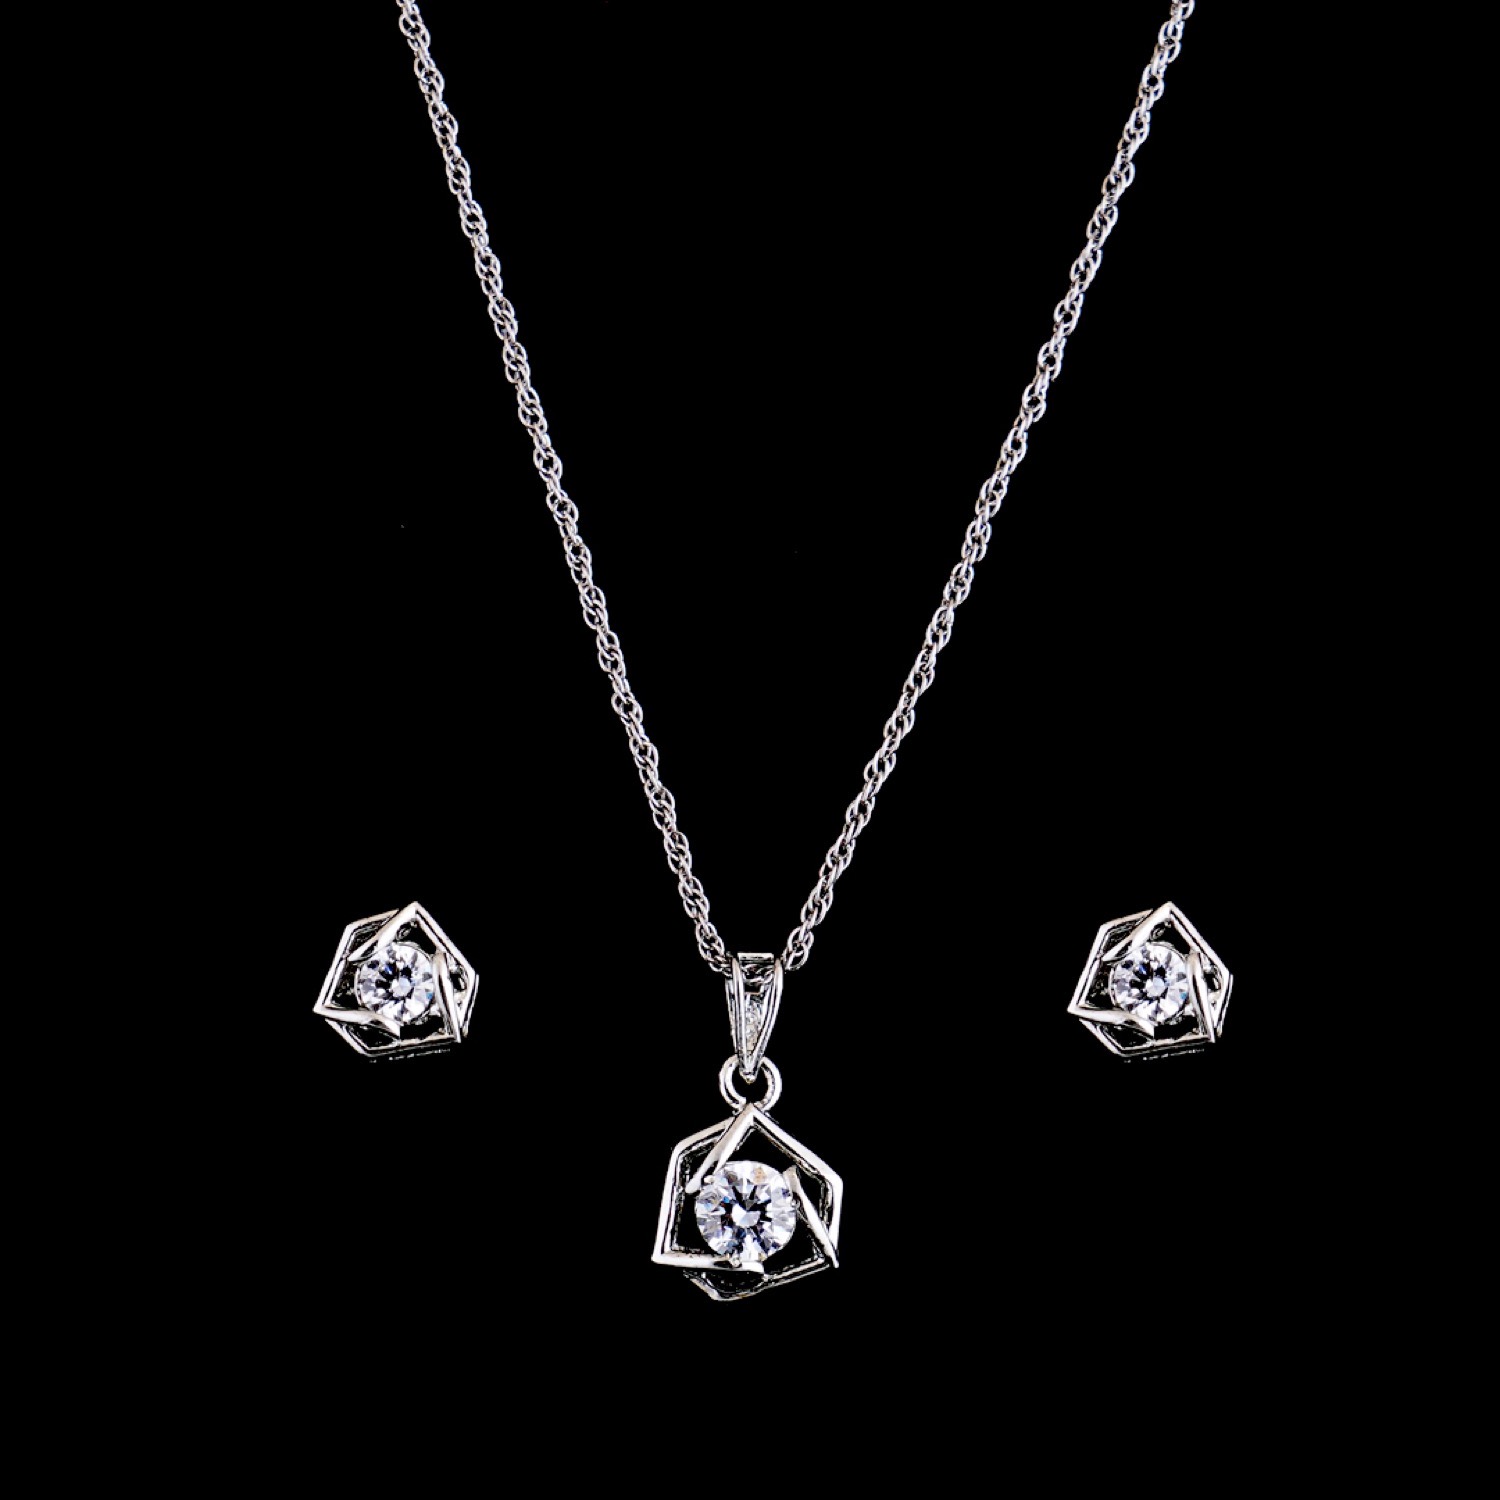 varam_swarovski_white_stone_hexagon_design_silver_chain_with_earrings_4-1